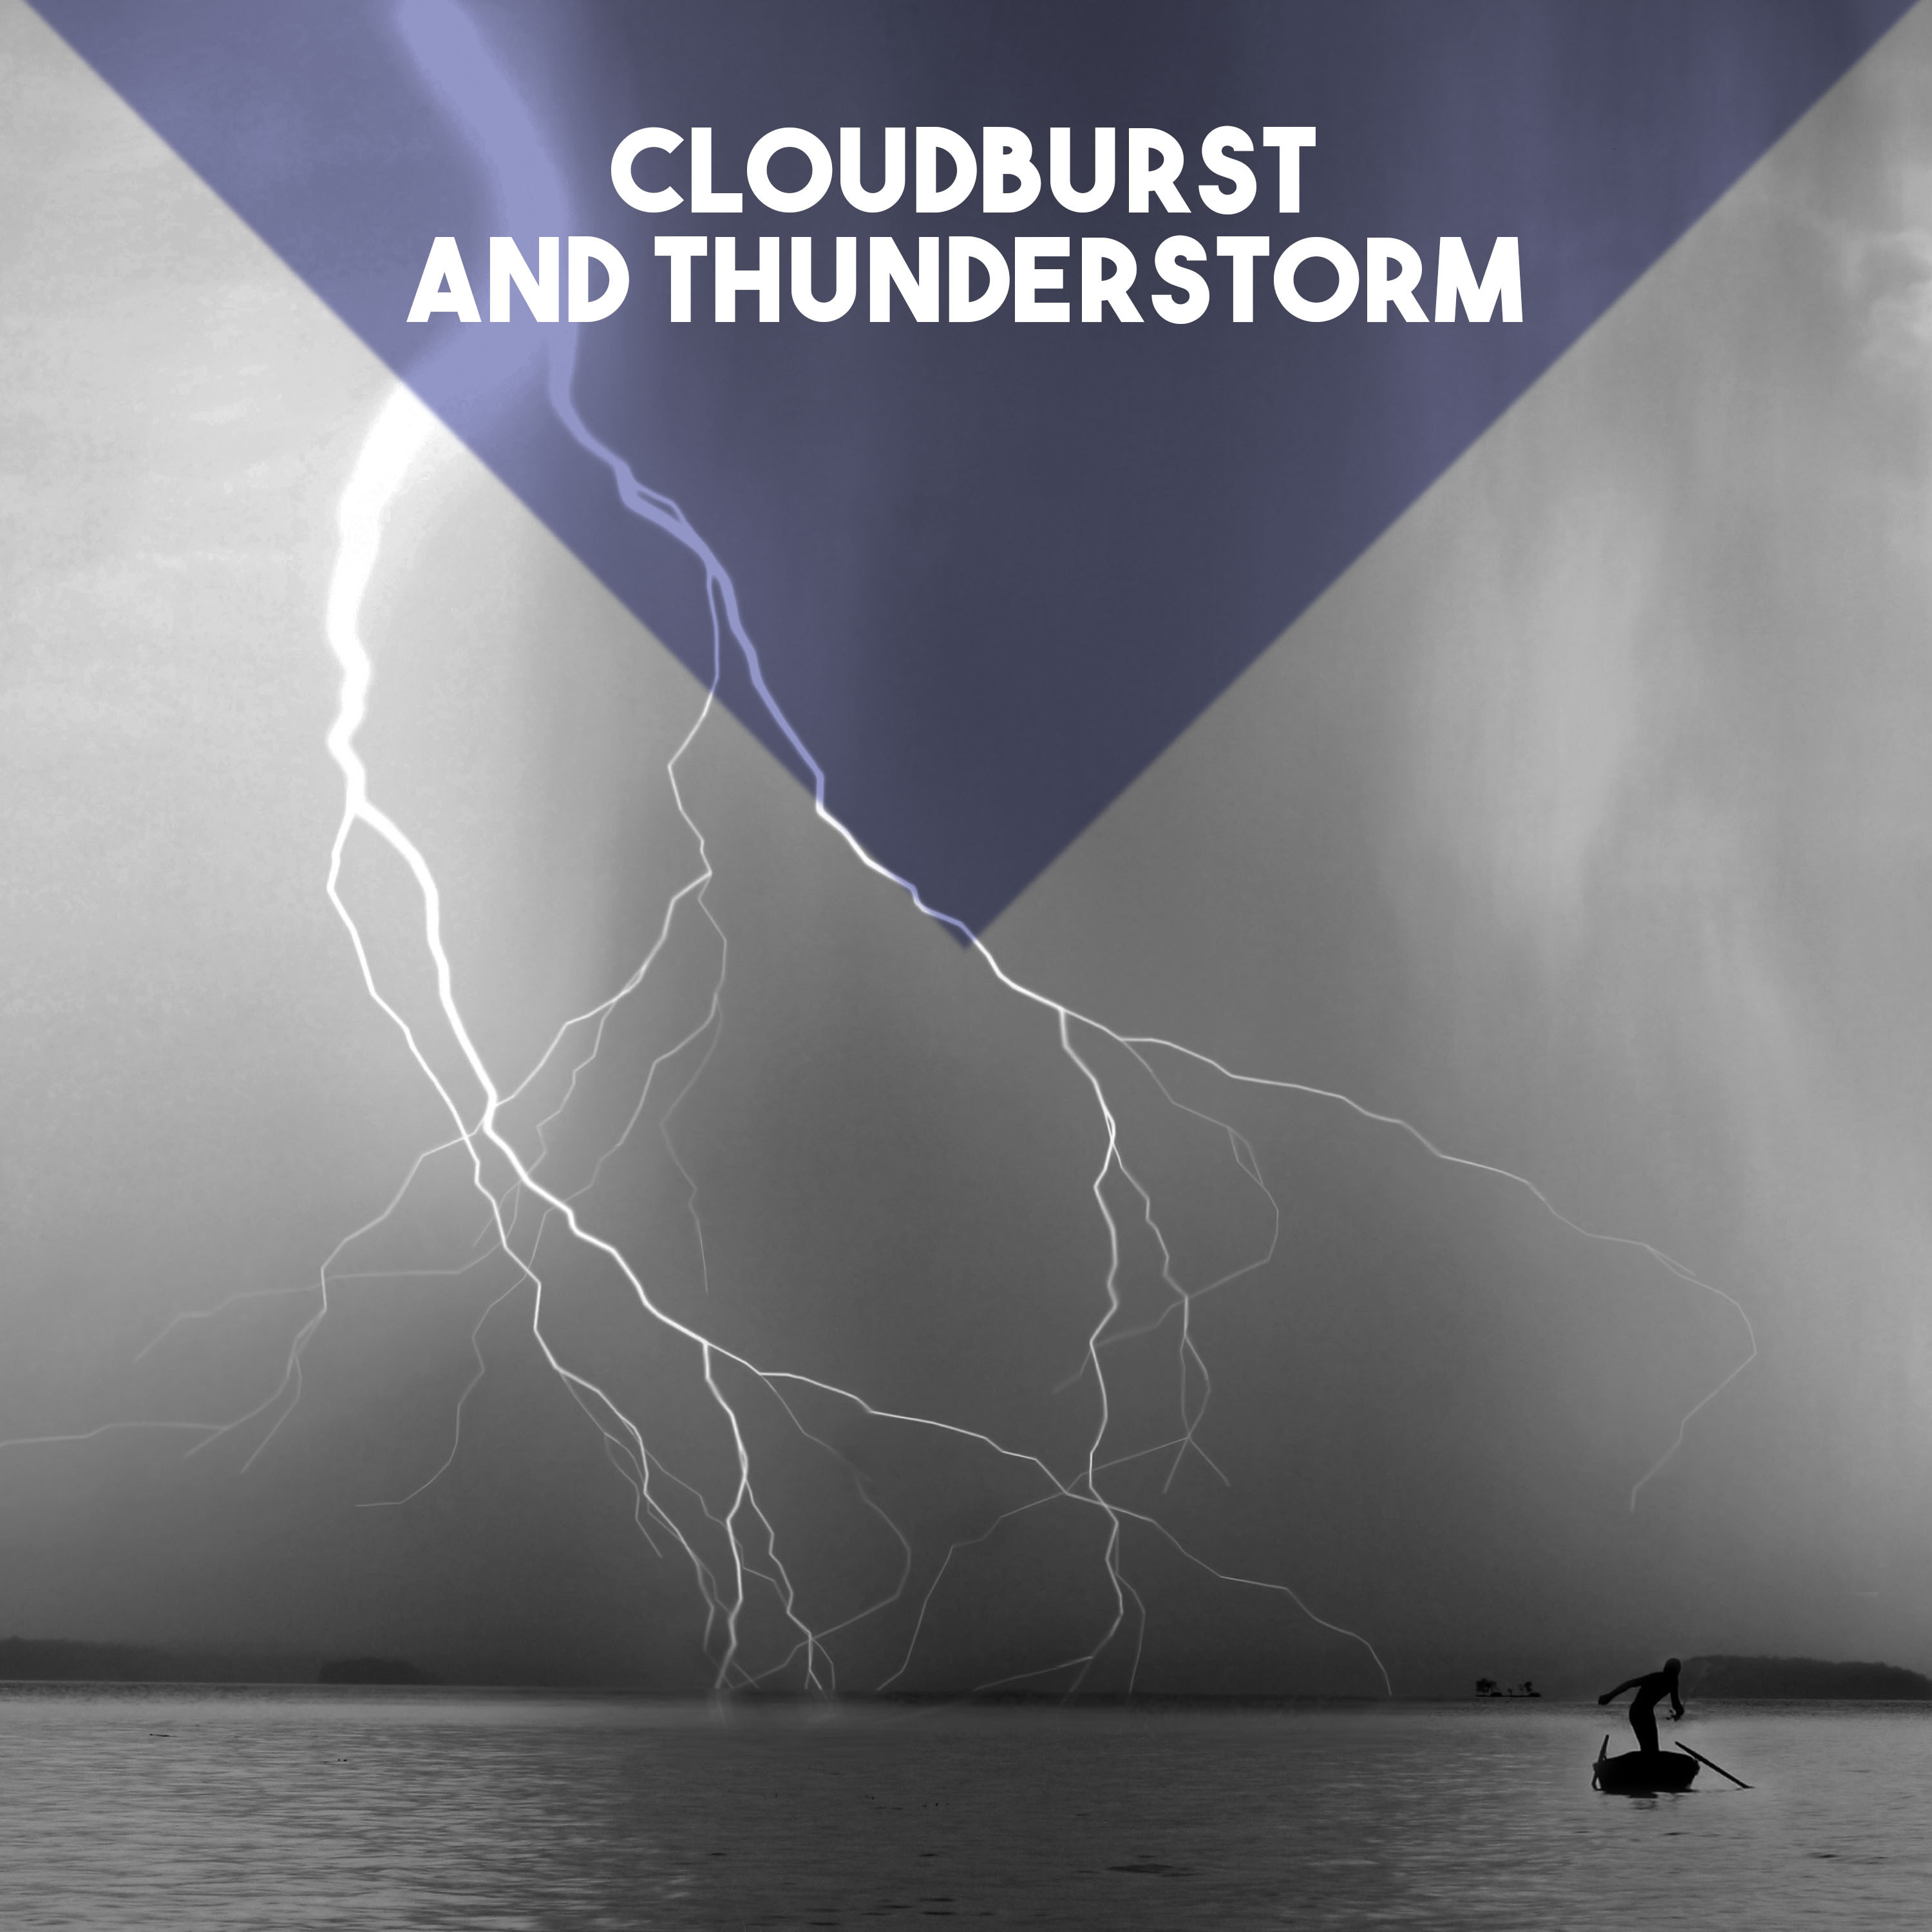 Cloudburst and Thunderstorm